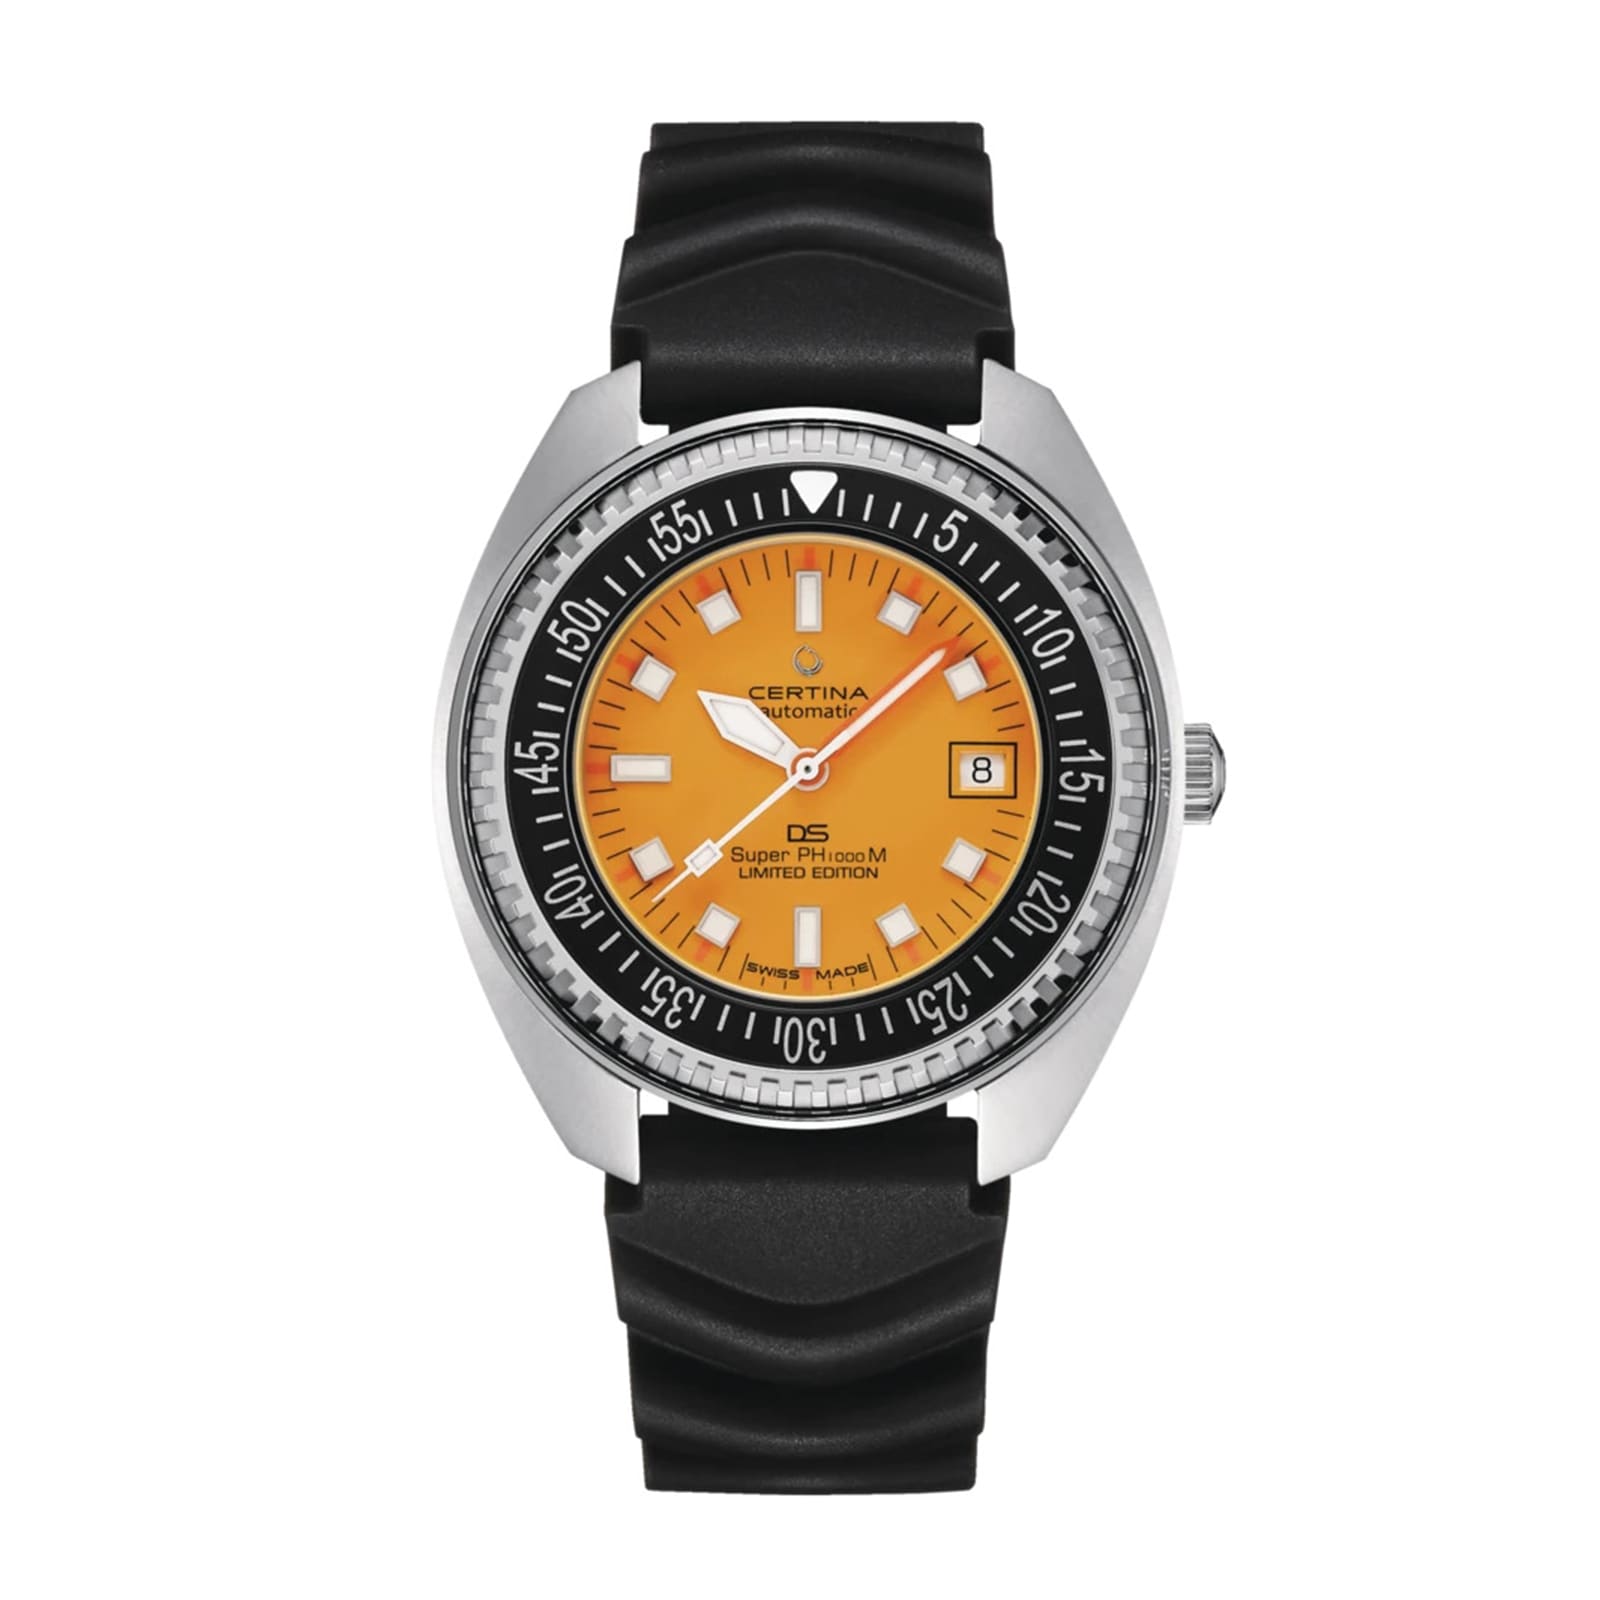 DS Super PH1000M 43.5mm Limited Edition Mens Watch Orange